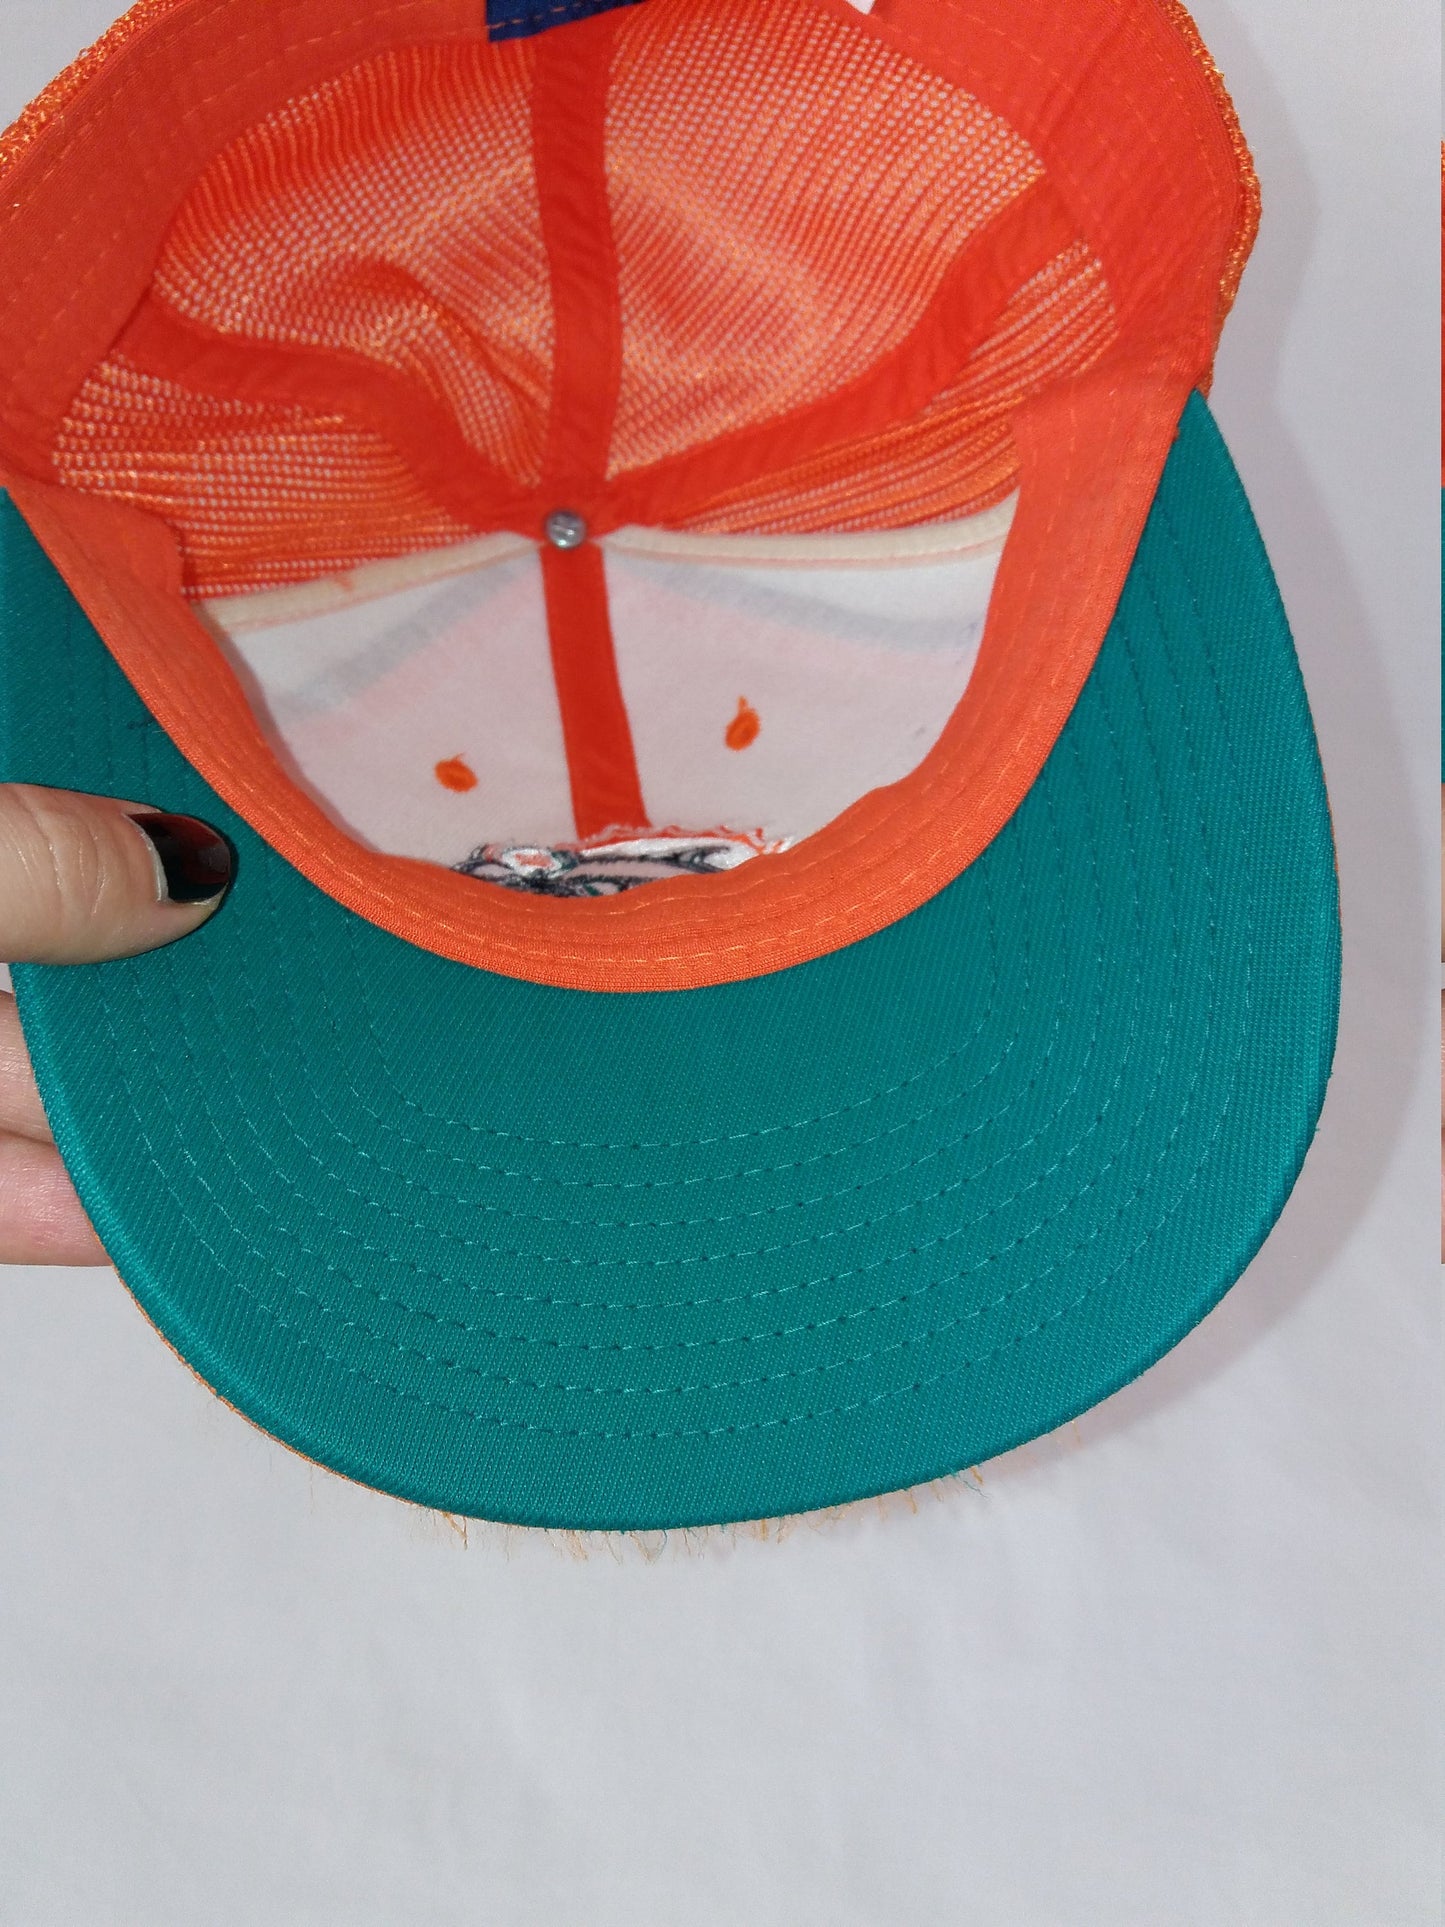 REEBOK Miami Dolphins NFL Football Baseball Hat - size L/XL